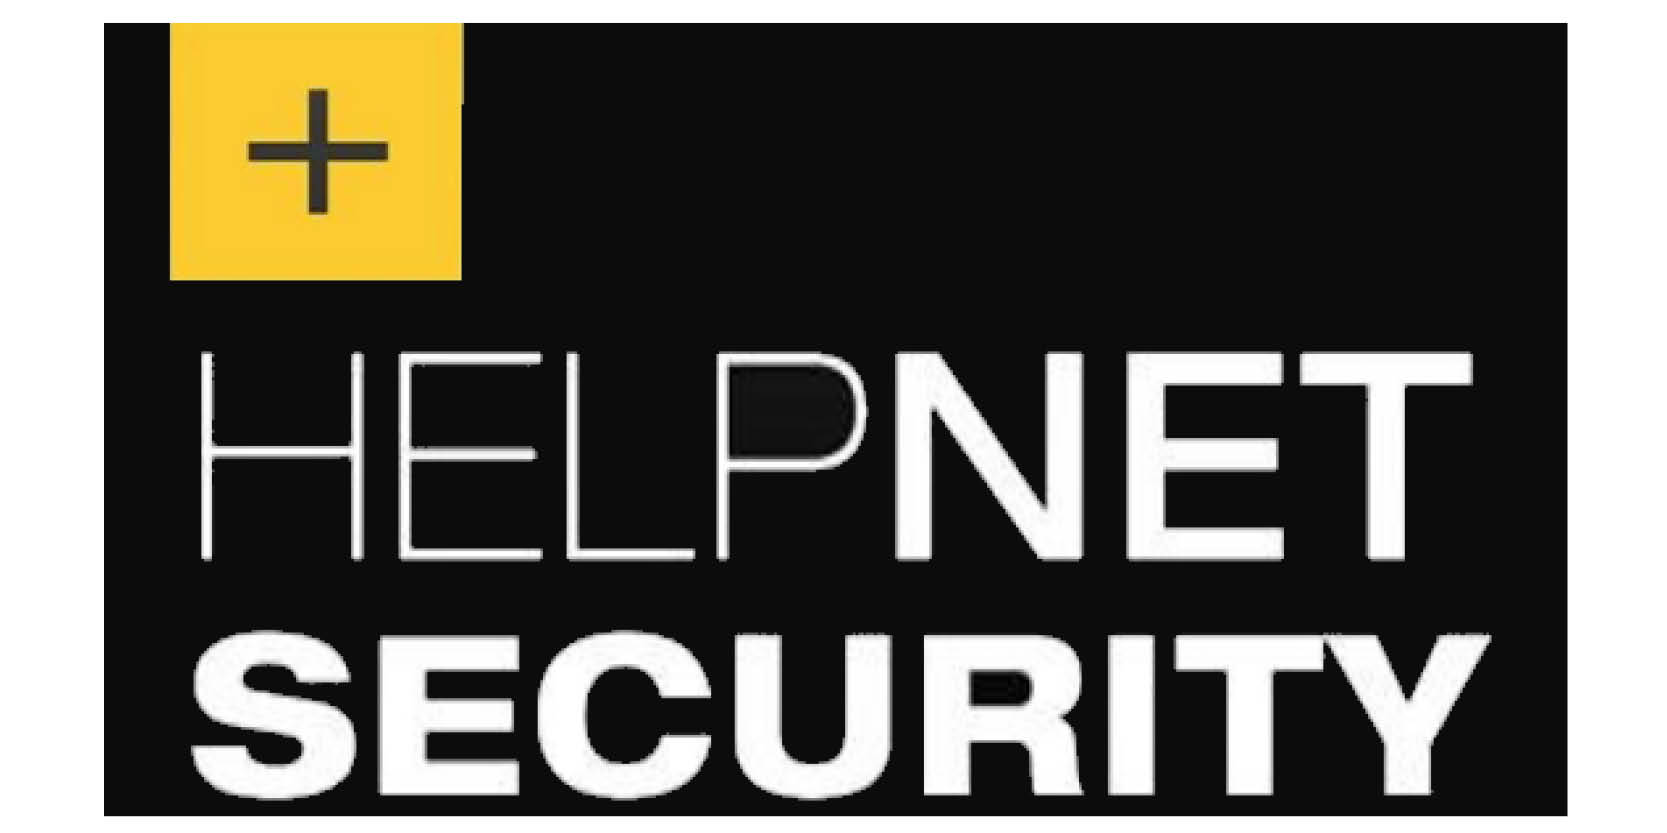 help net security logo